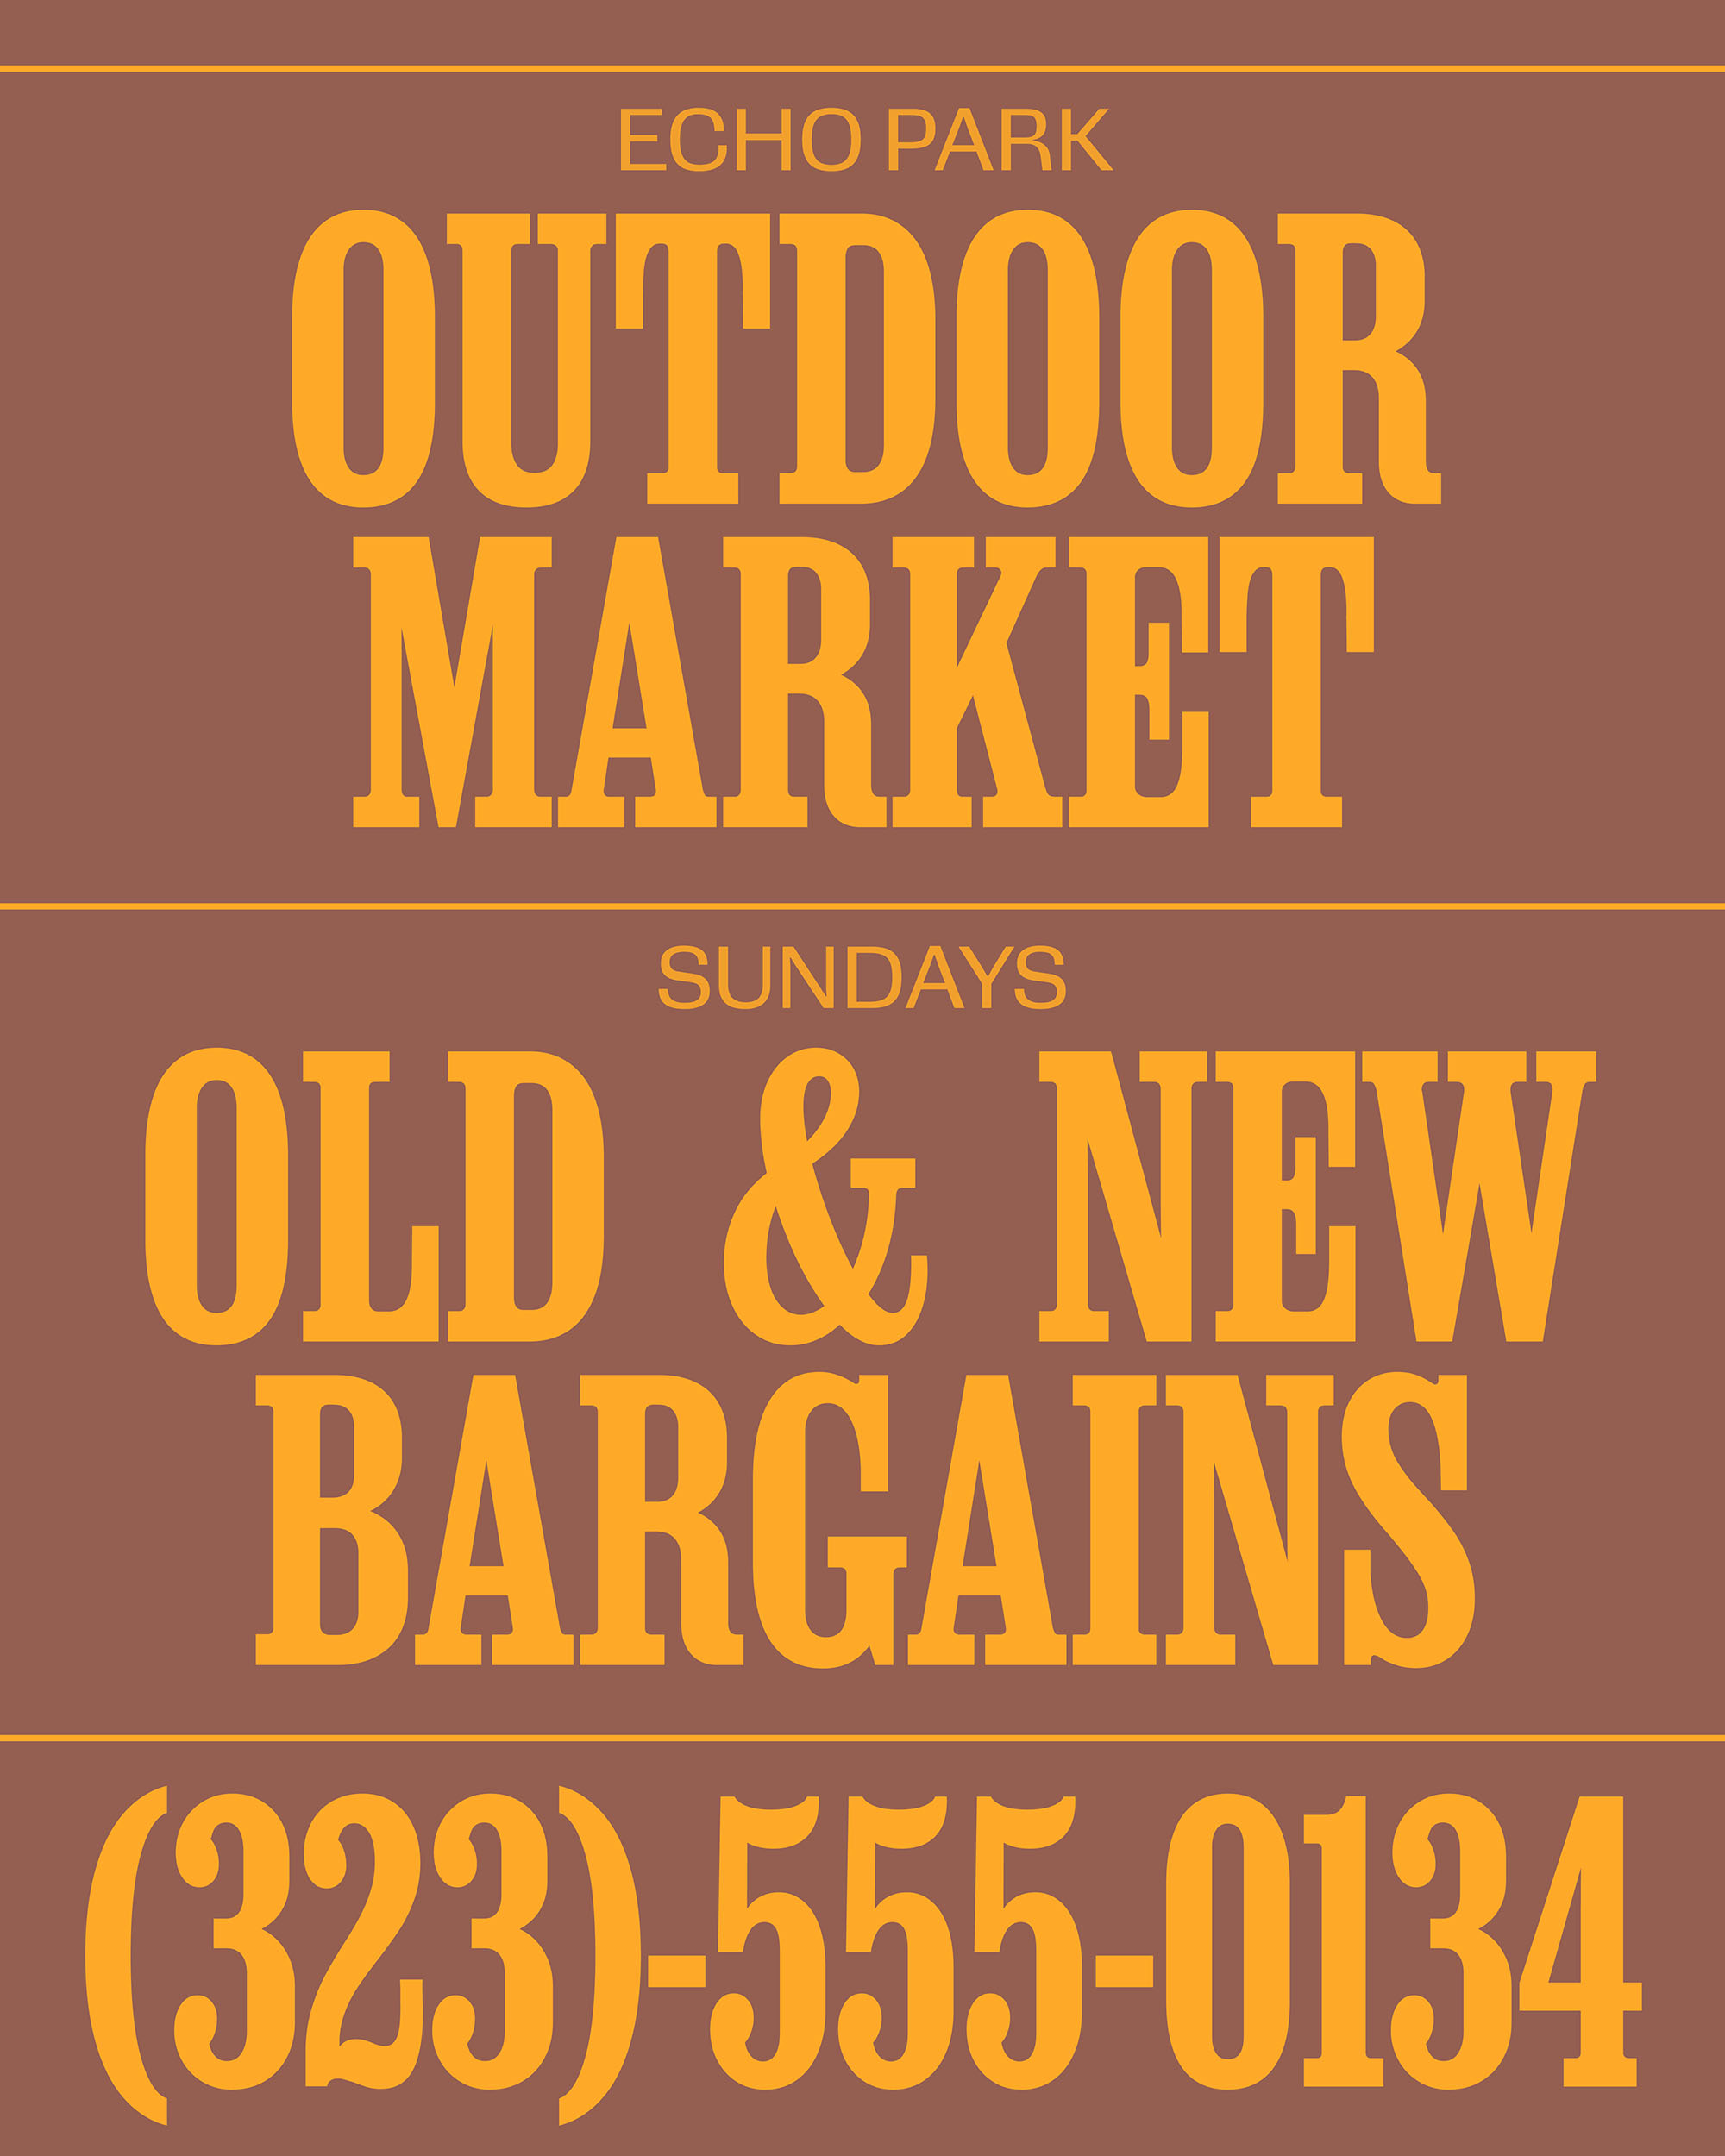 Echo Park Outdoor Market; Sundays Old & New Bargains